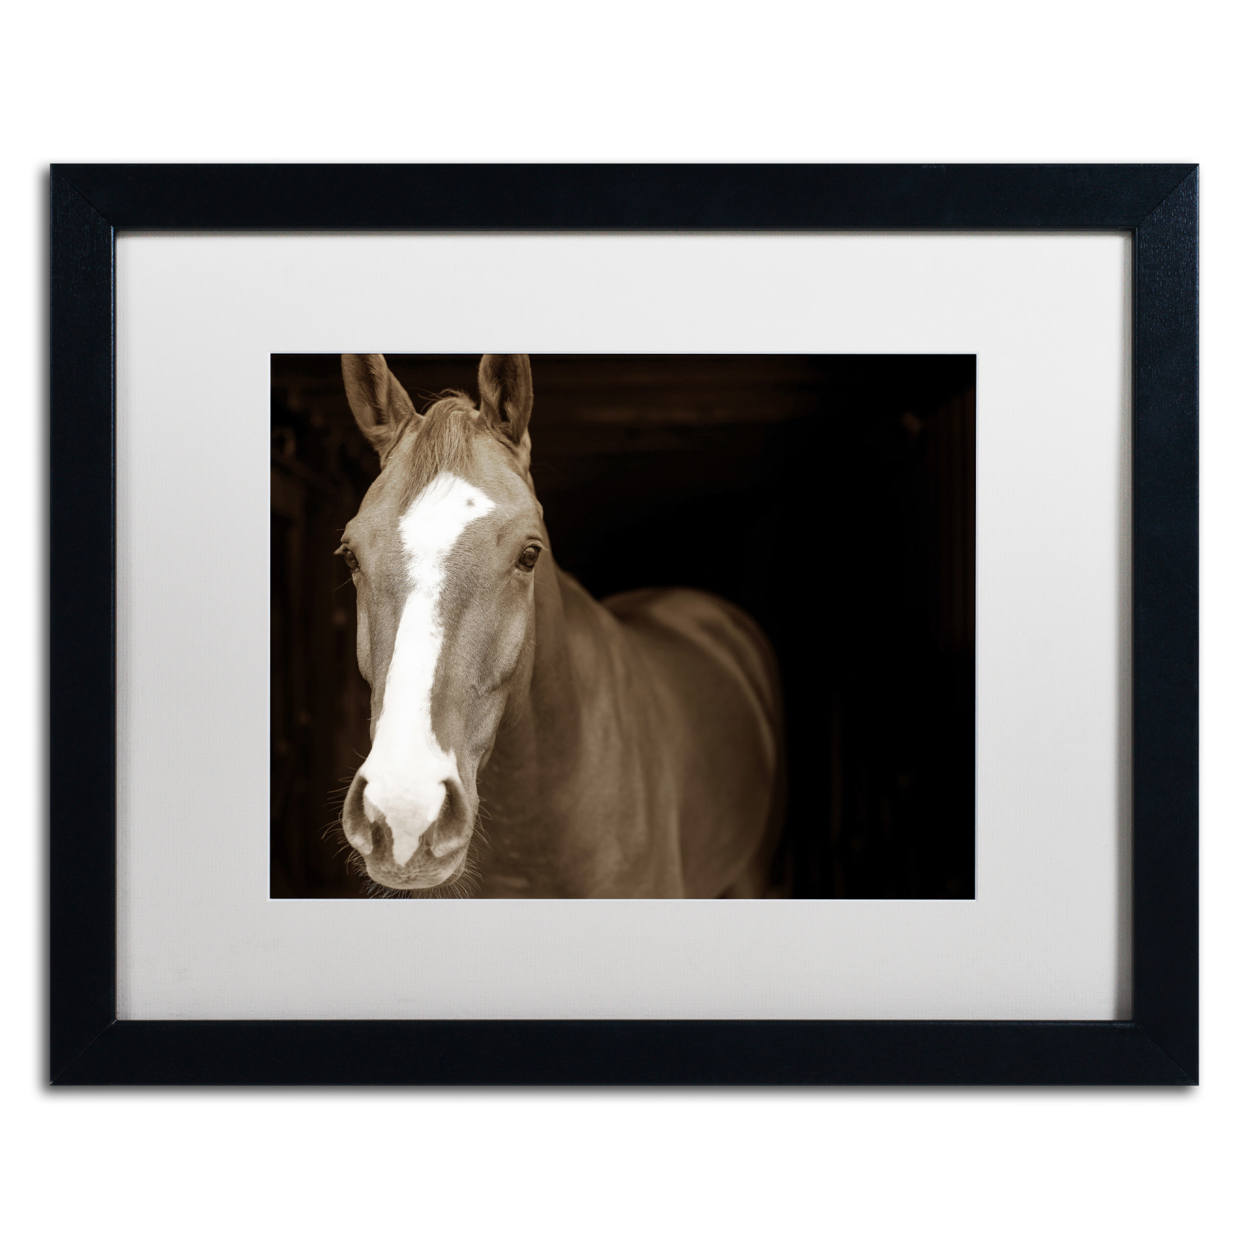 Preston 'Horse Portrait' Black Wooden Framed Art 18 X 22 Inches